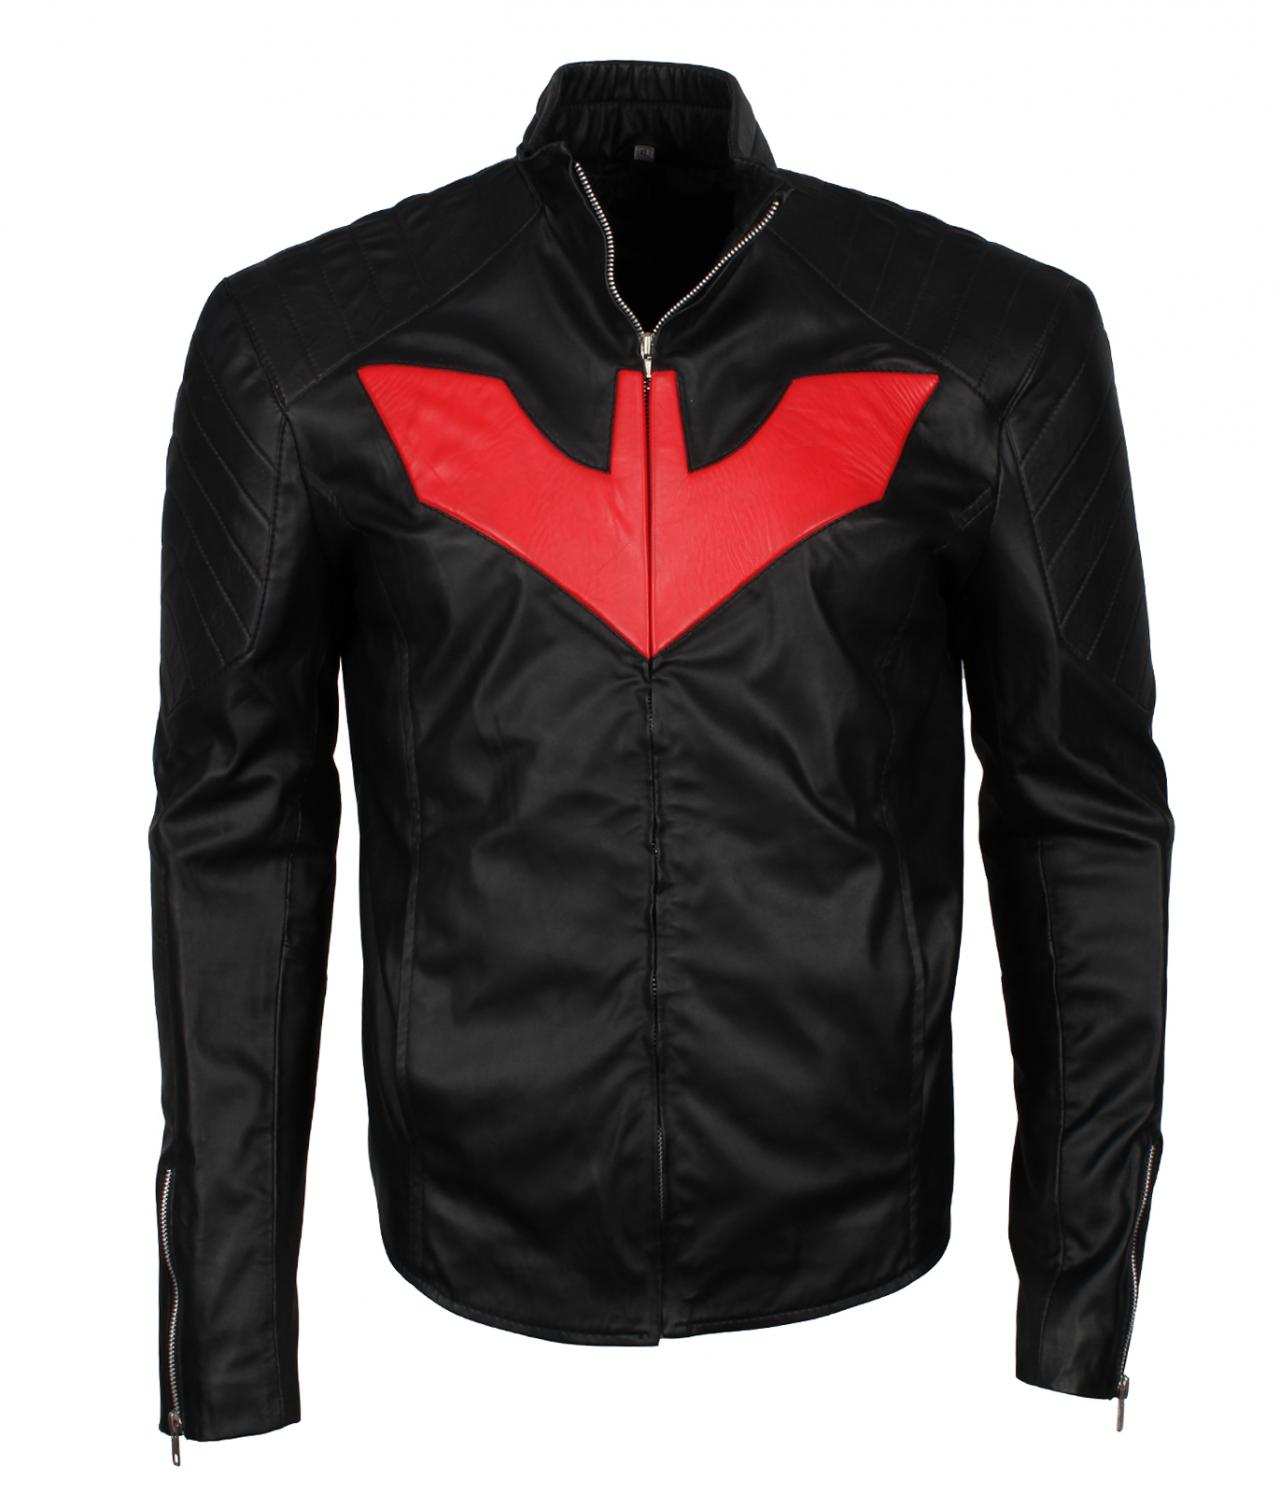 Bat The Man Beyond Black Cosplay Faux Leather Biker Jacket Costume